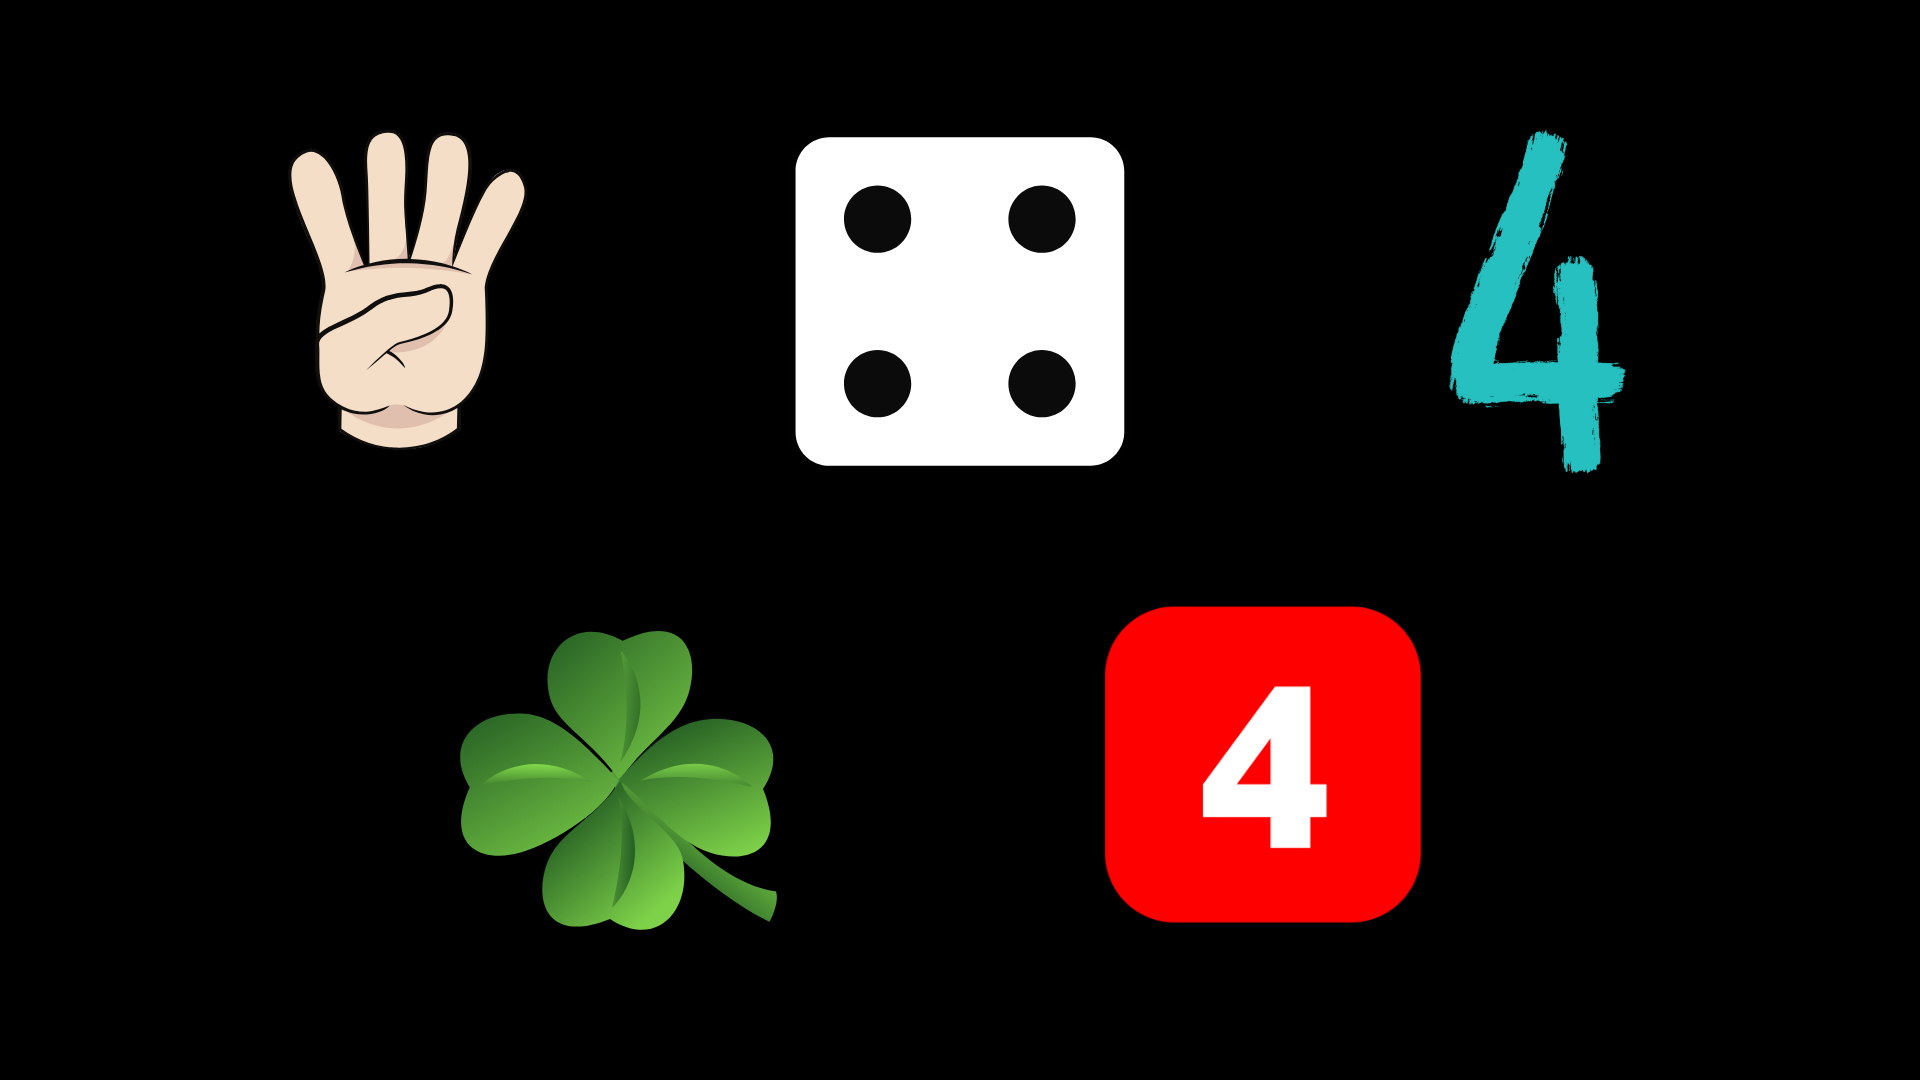 Symbols for 4